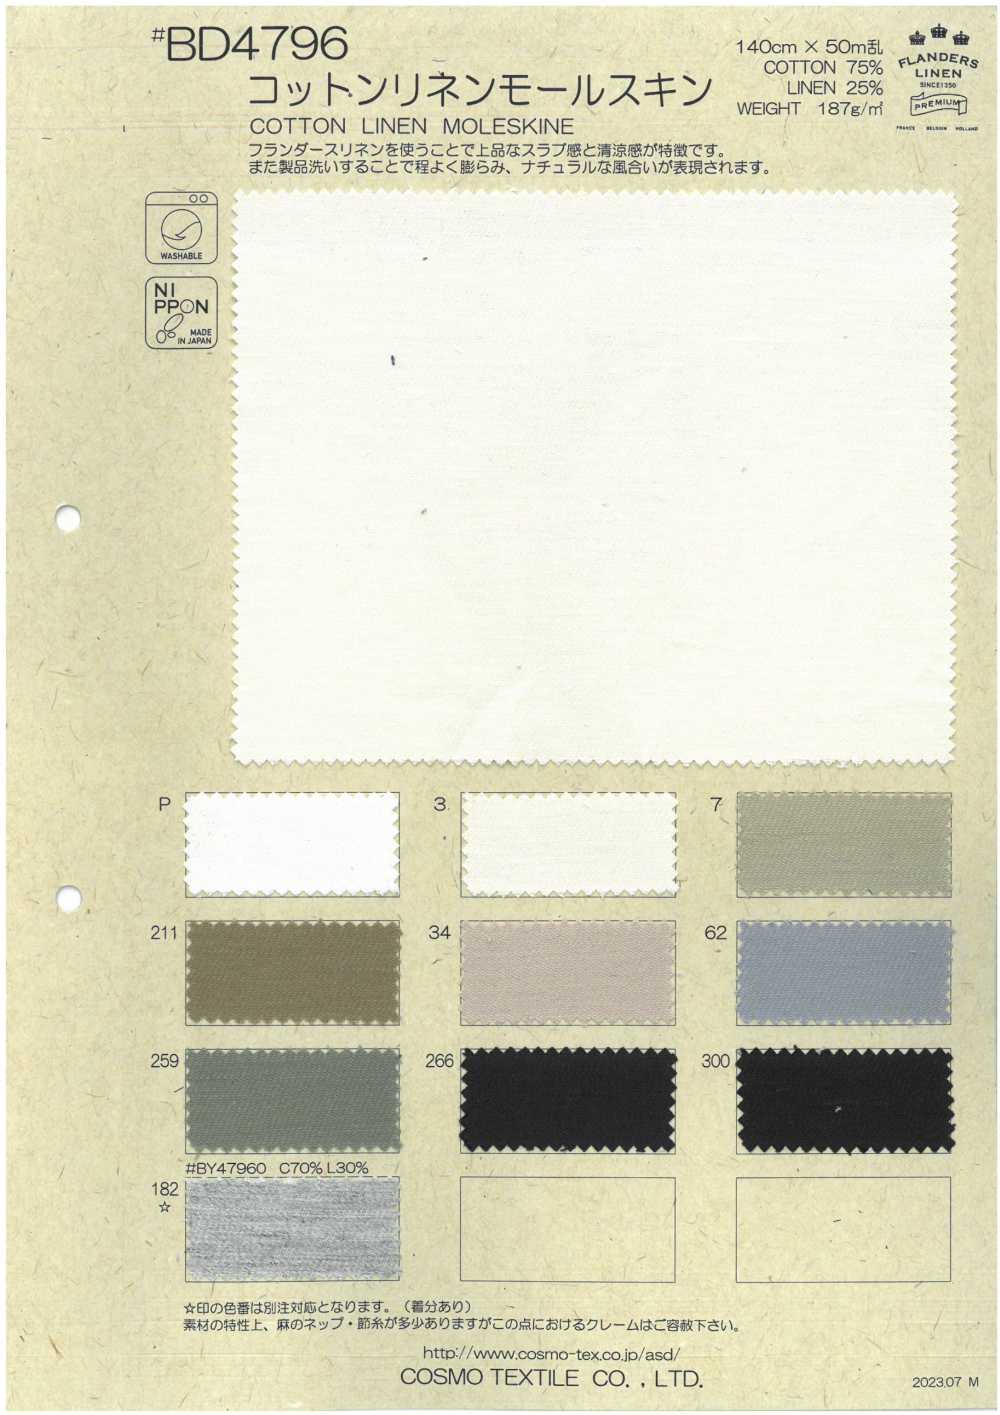 BD4796 Moleskin De Lino De Algodón[Fabrica Textil] COSMO TEXTILE